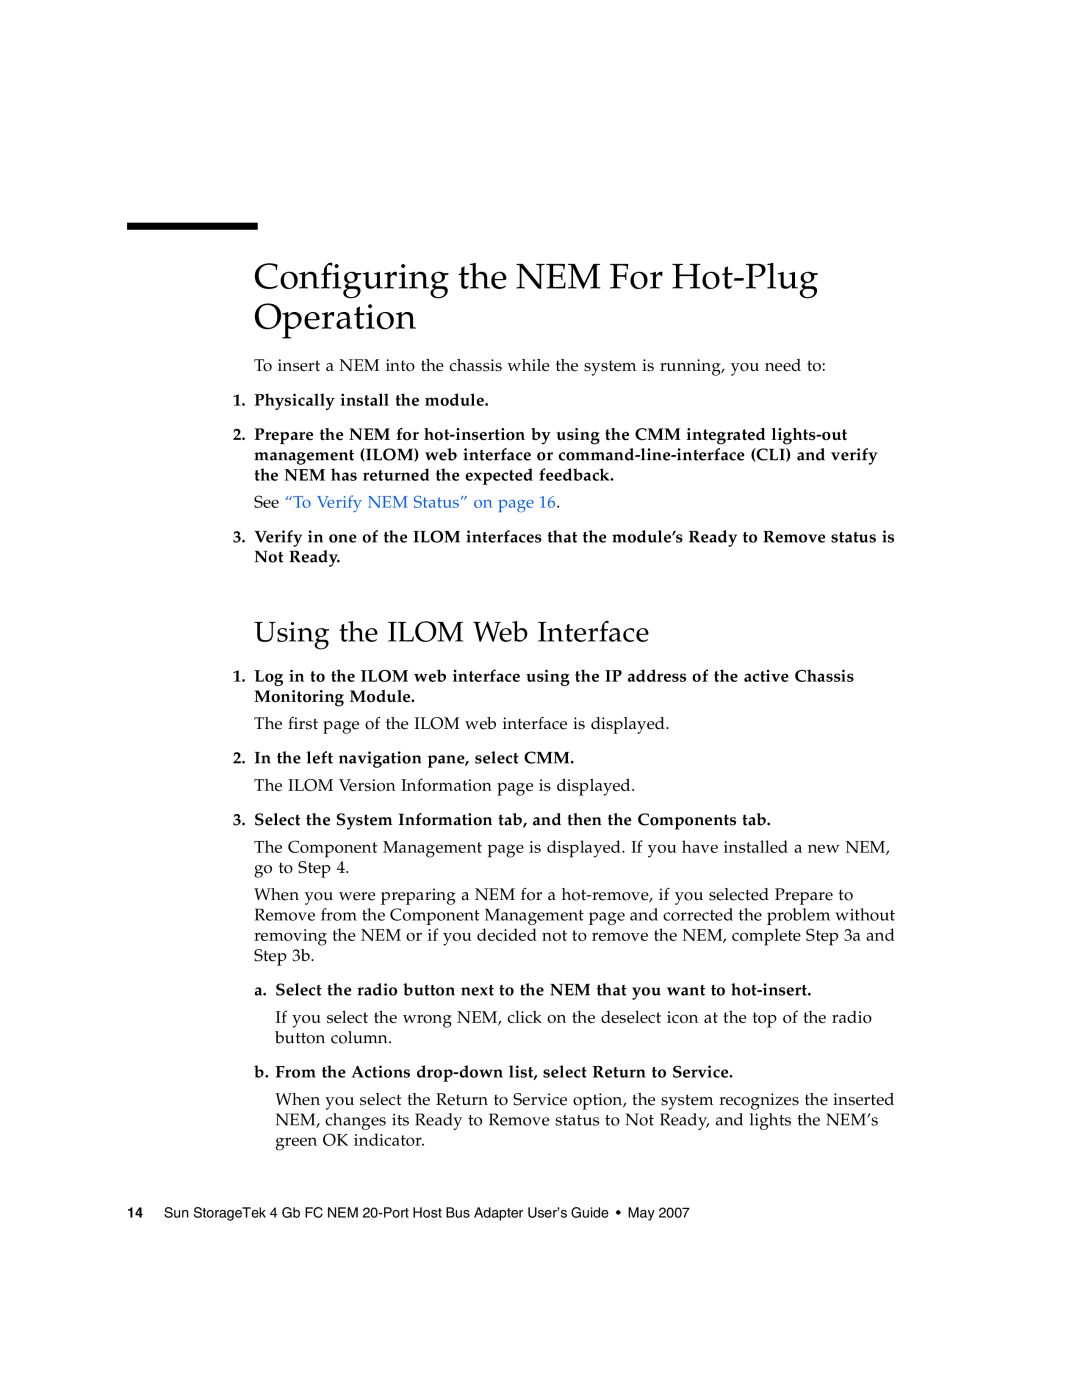 Sun Microsystems 2.0 manual Configuring the NEM For Hot-Plug Operation, Using the ILOM Web Interface 